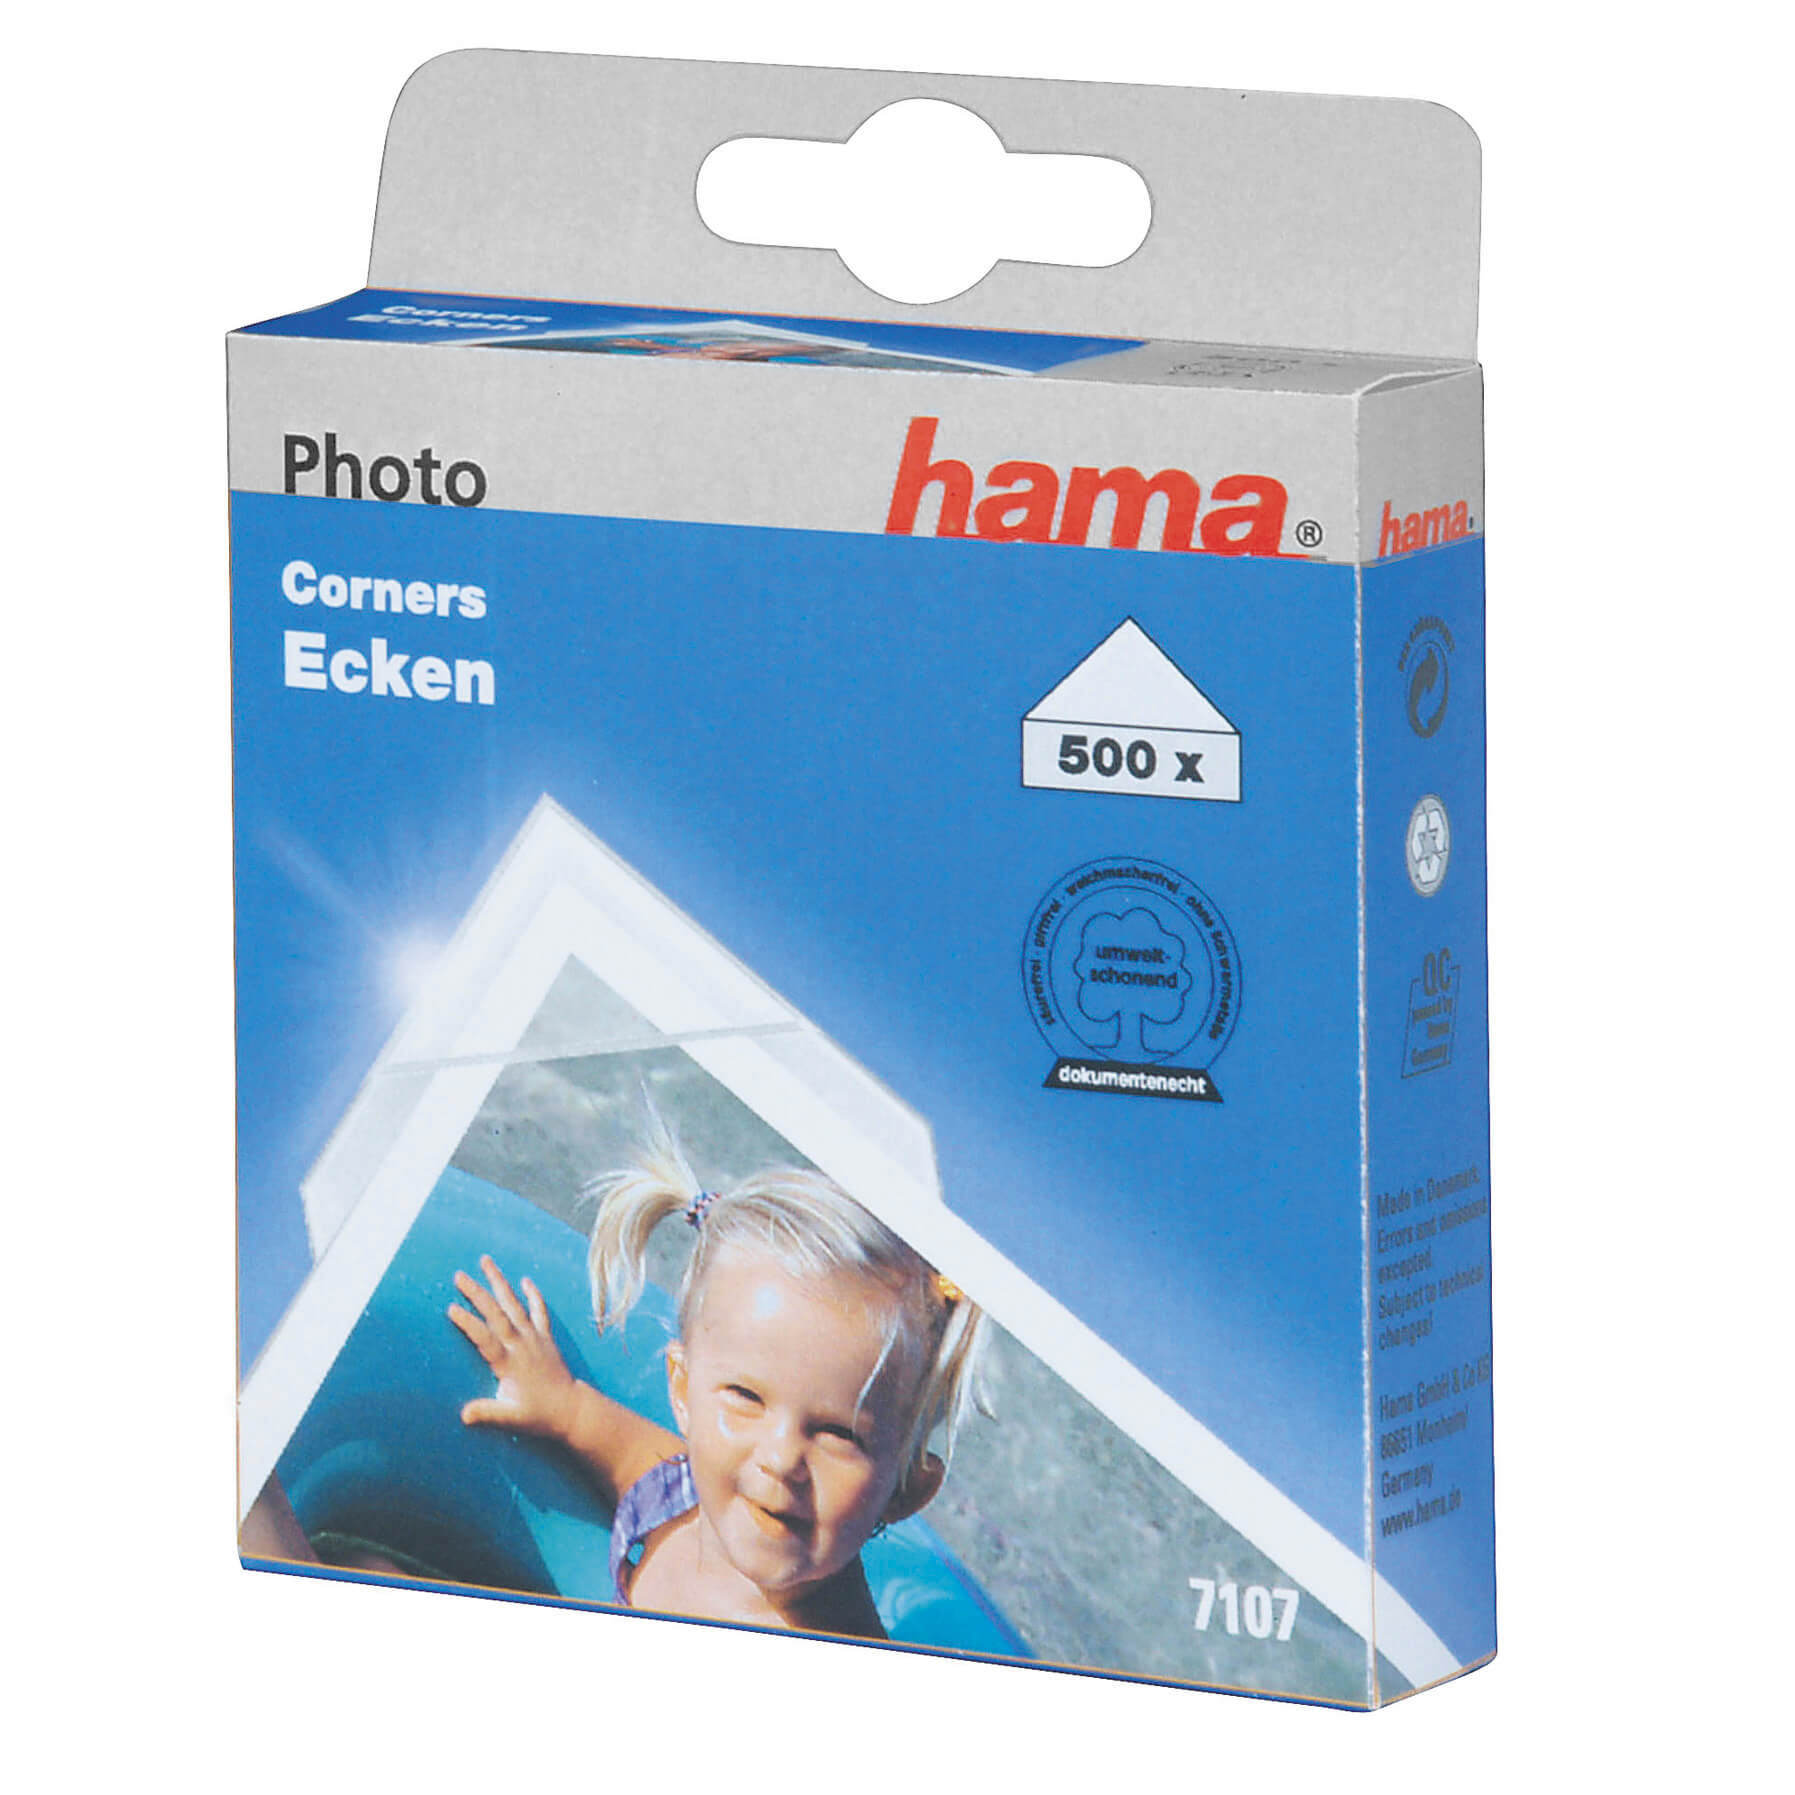 HAMA Photo Corners 500, 10 pcs. in a display box